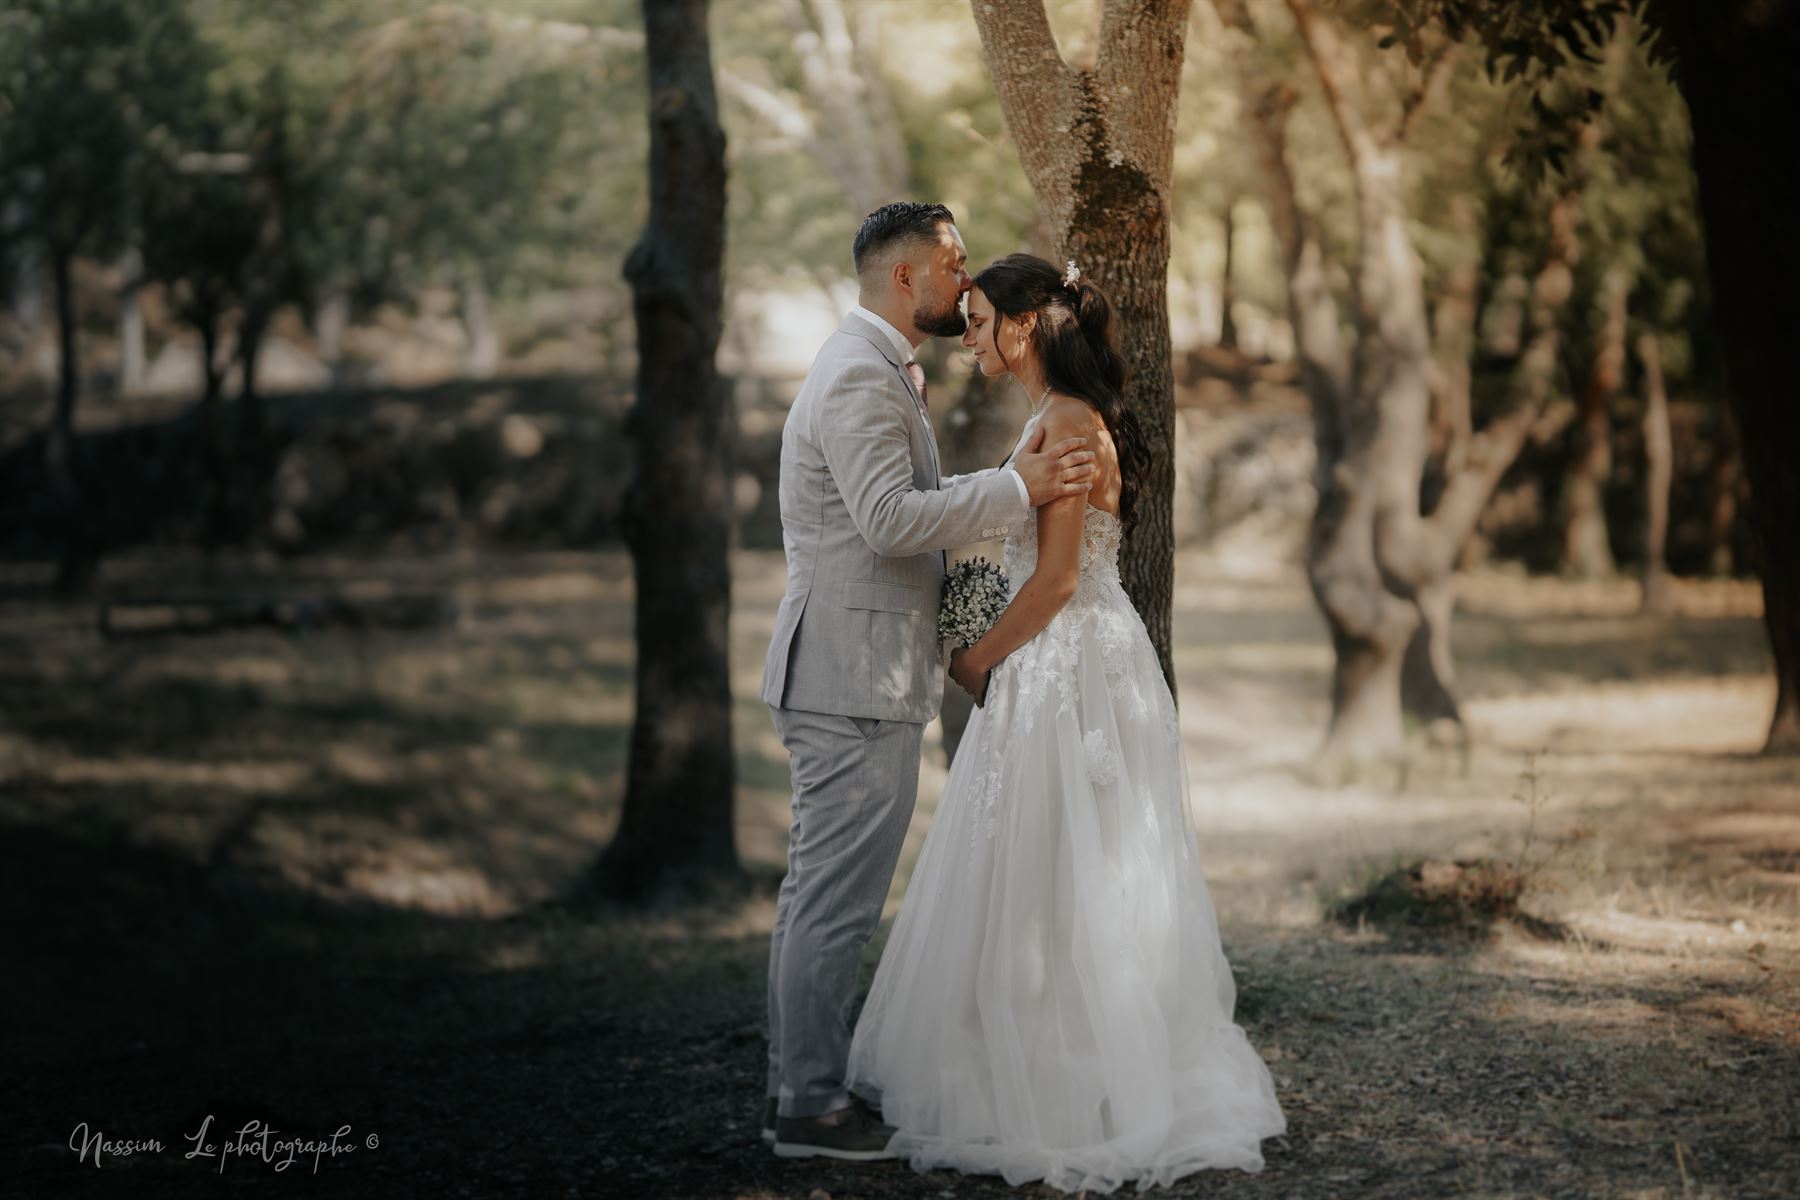 Wedding Photographer Aix en Provence: Capturing Love's Embrace 2